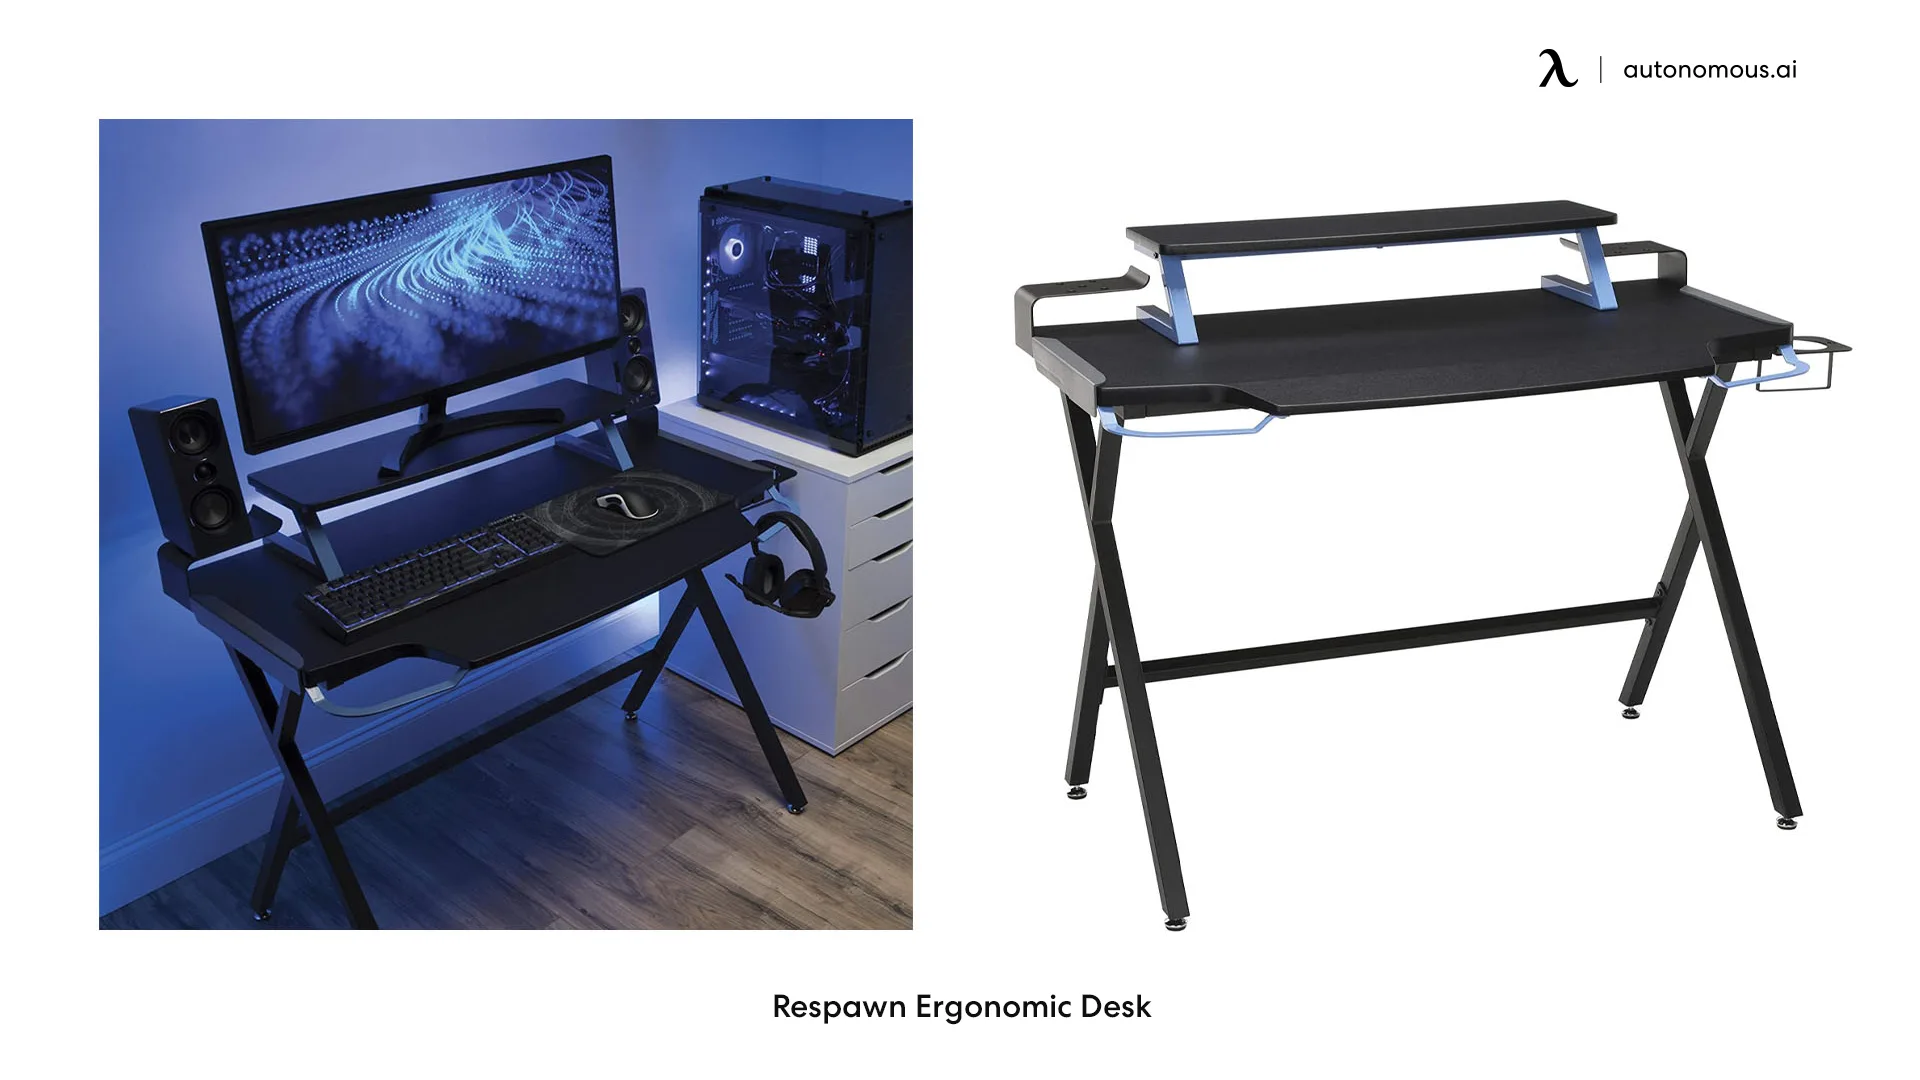 Respawn Ergonomic Desk